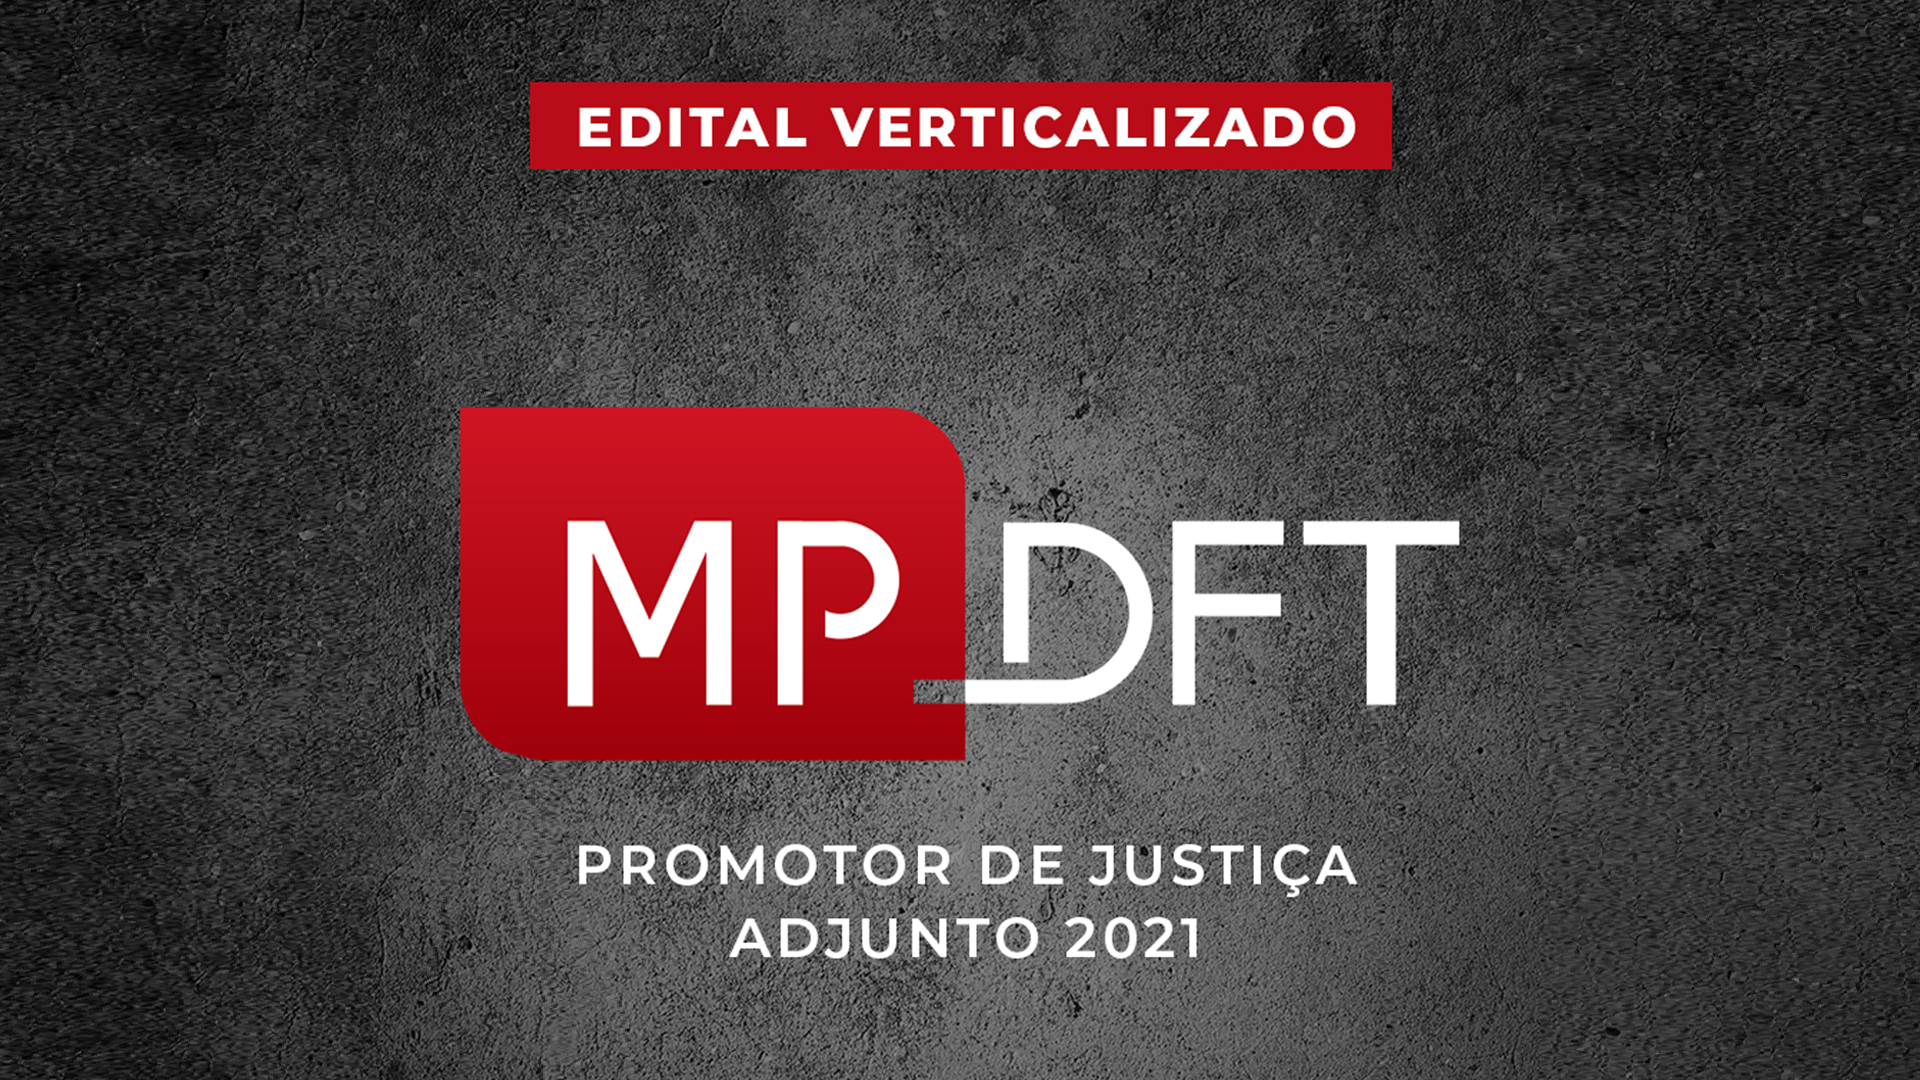 MPDFT (2021): Edital verticalizado 